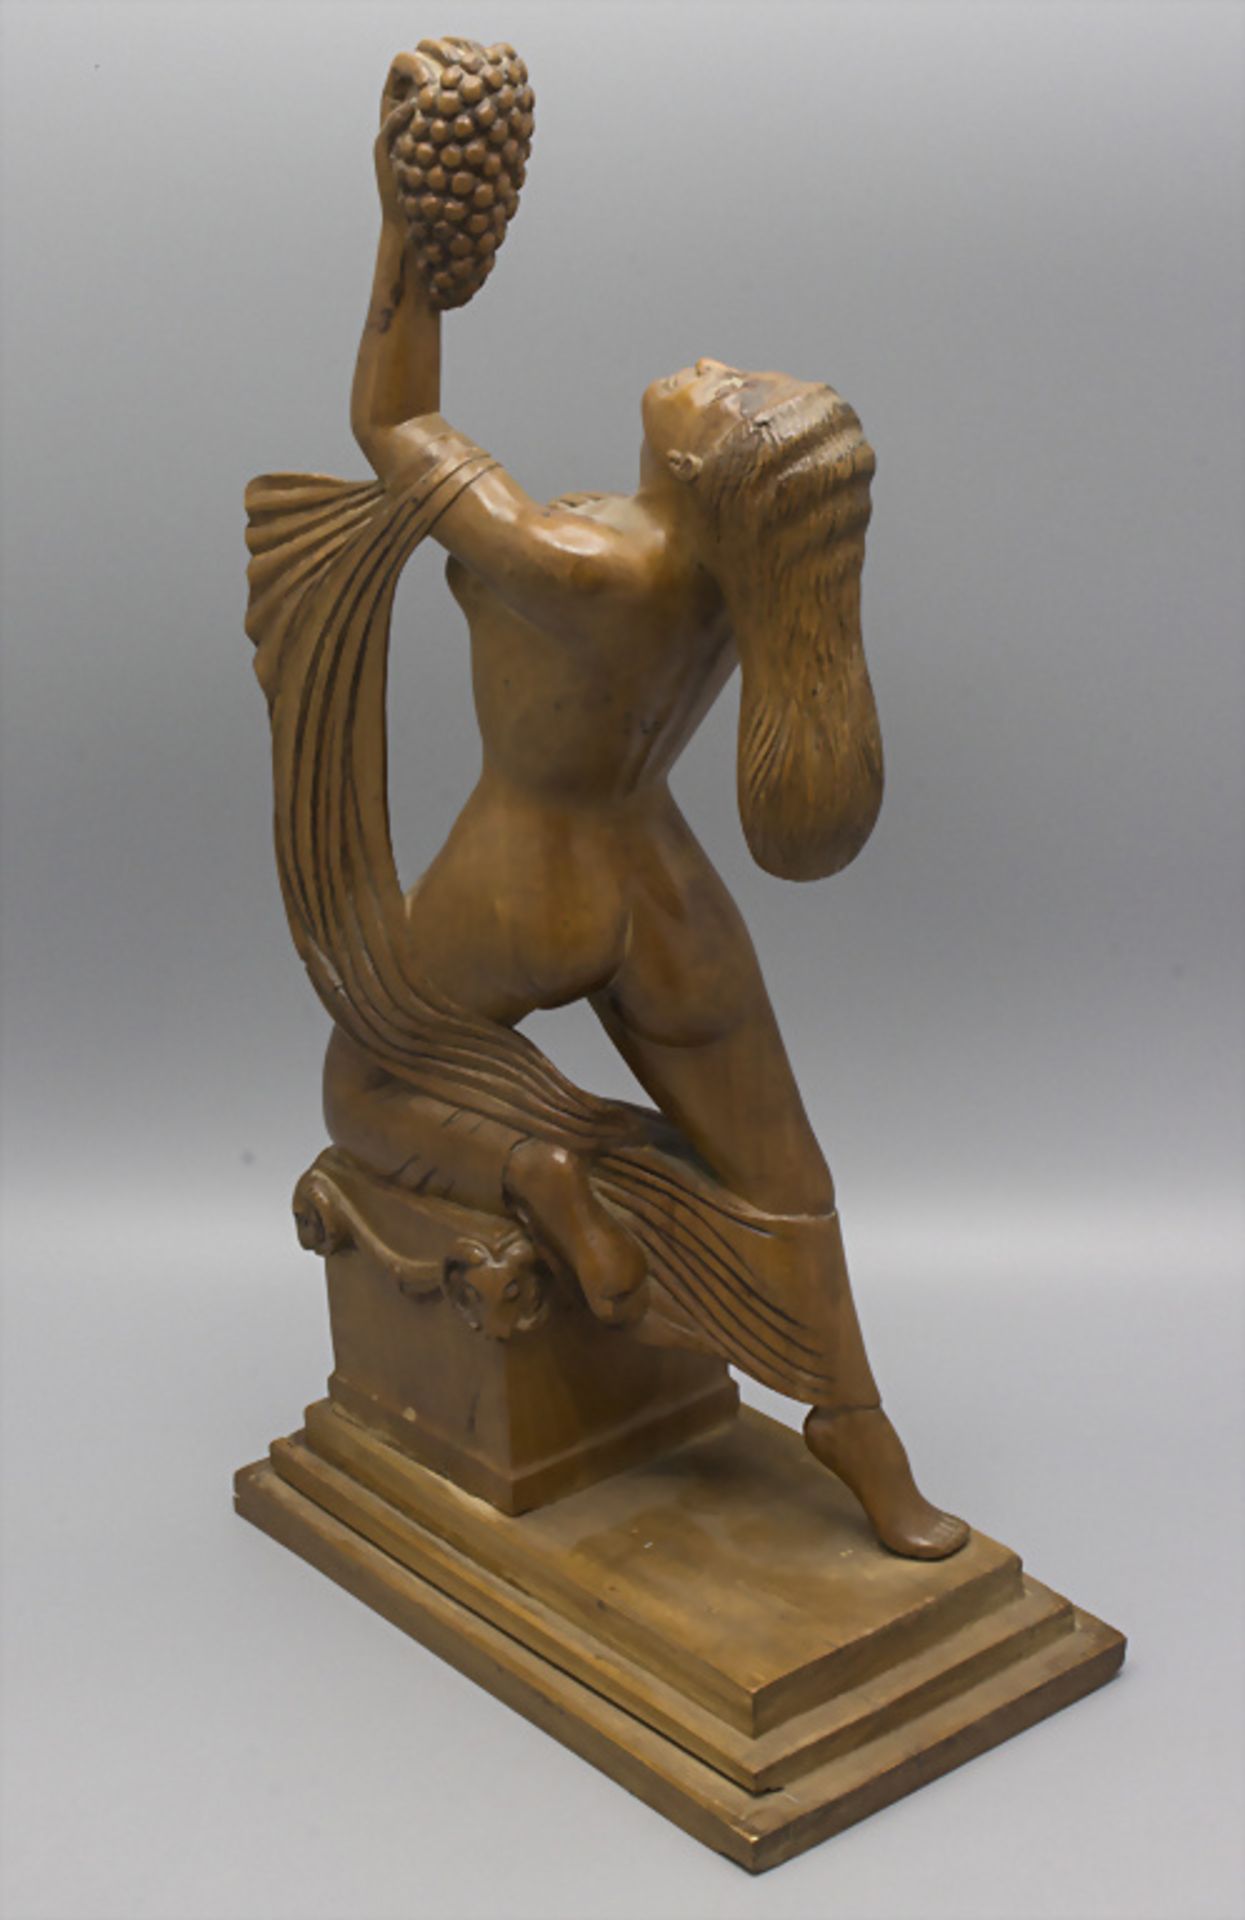 Holzskulptur 'weiblicher Akt mit Trauben' / A wooden scultpture of a female nude with grapes, ... - Image 3 of 5